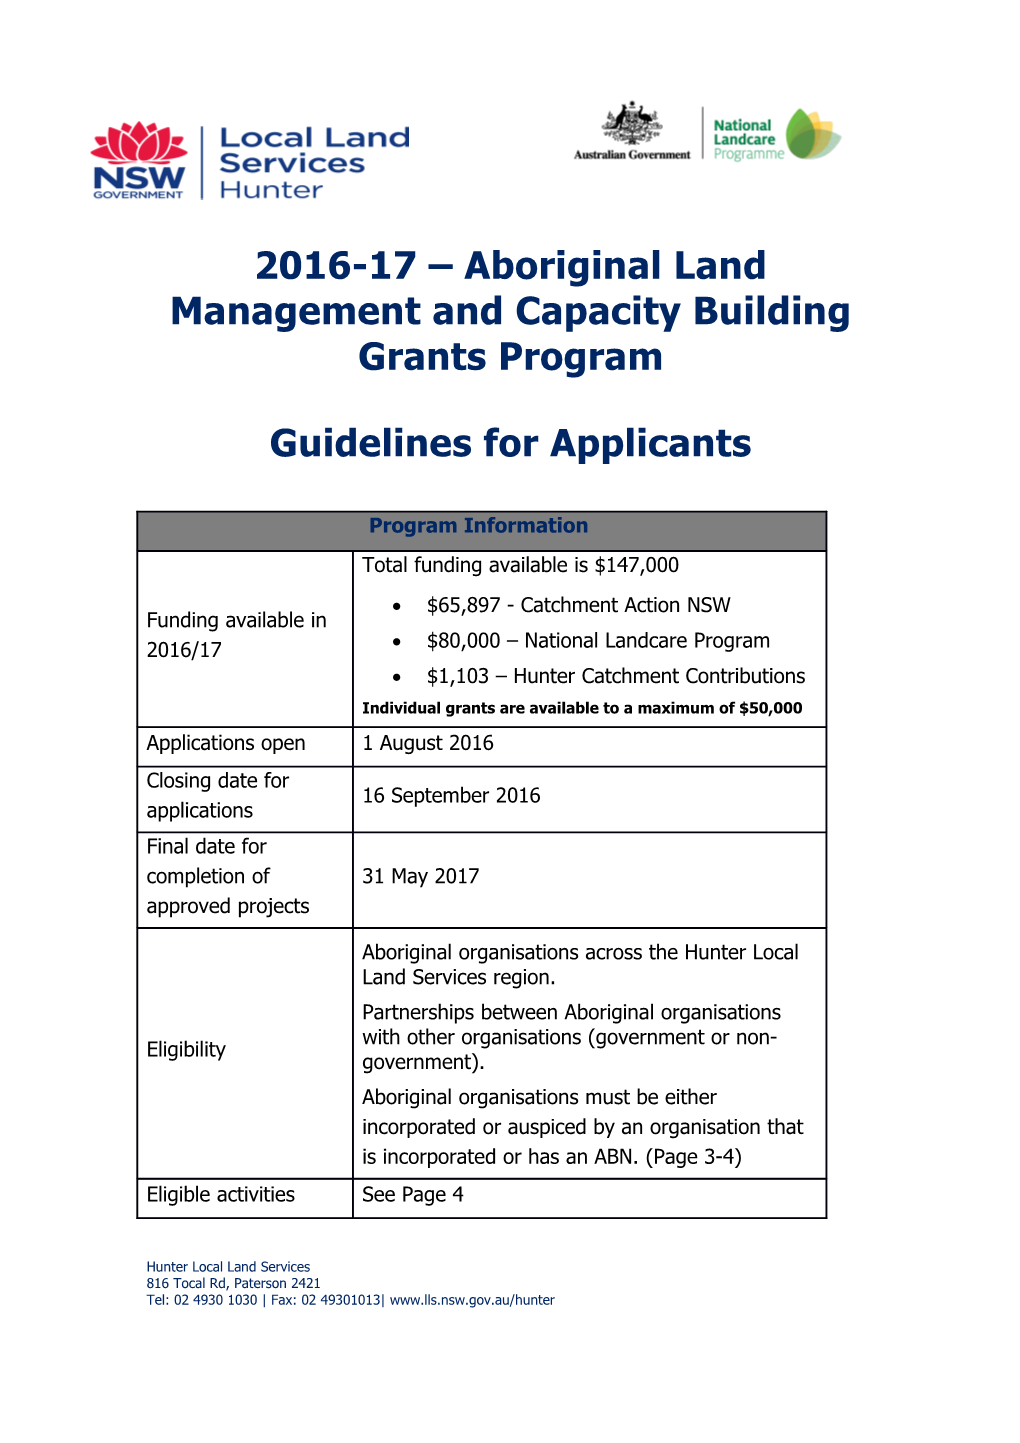 2016-17 Aboriginal Land Management and Capacity Building Grants Program